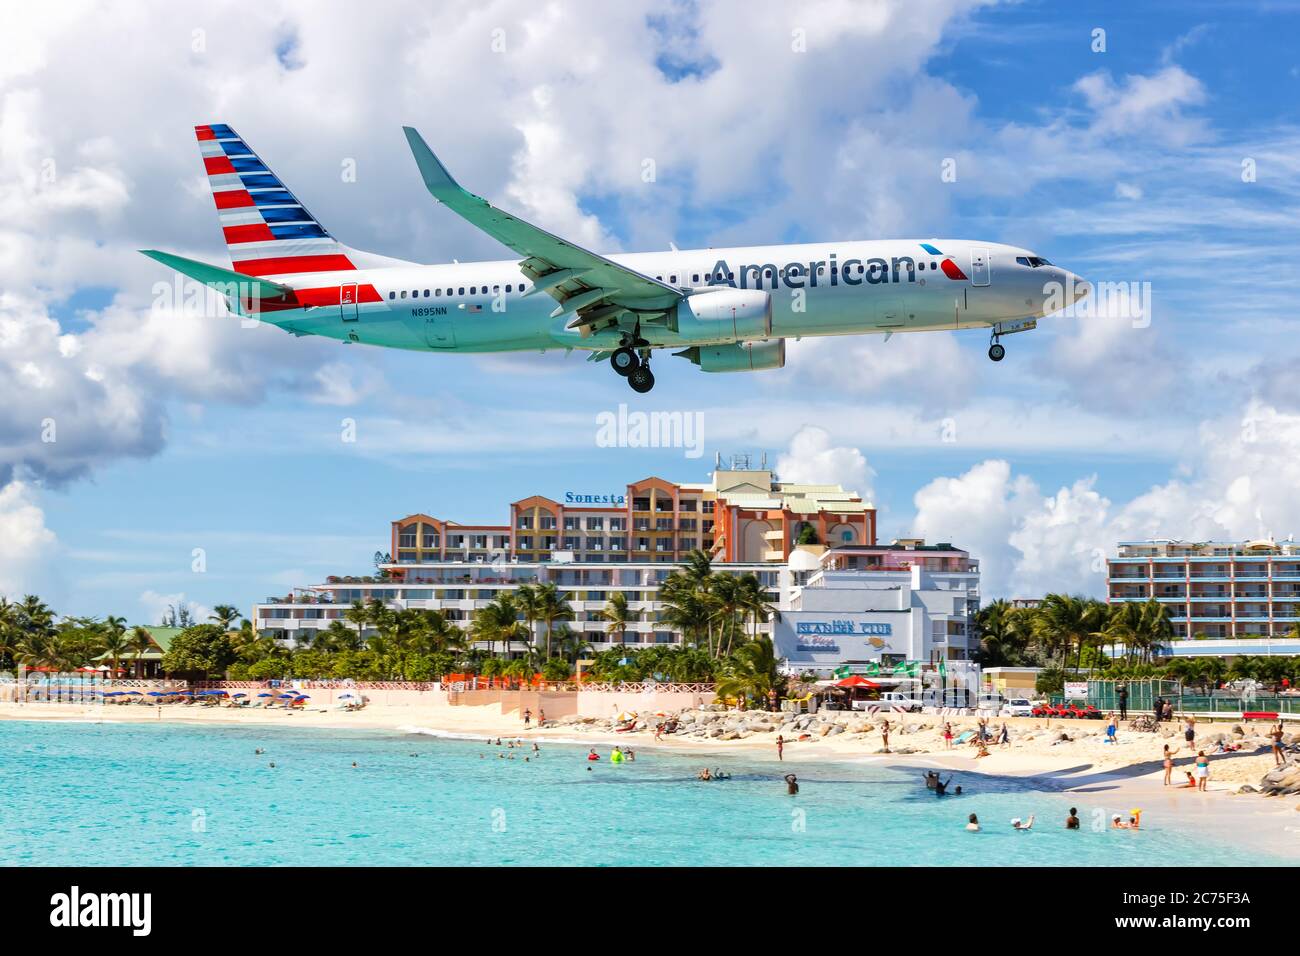 Sint Maarten - September 18, 2016: American Airlines Boeing 737-800 airplane at Sint Maarten airport (SXM) in the Caribbean. Boeing is an American air Stock Photo